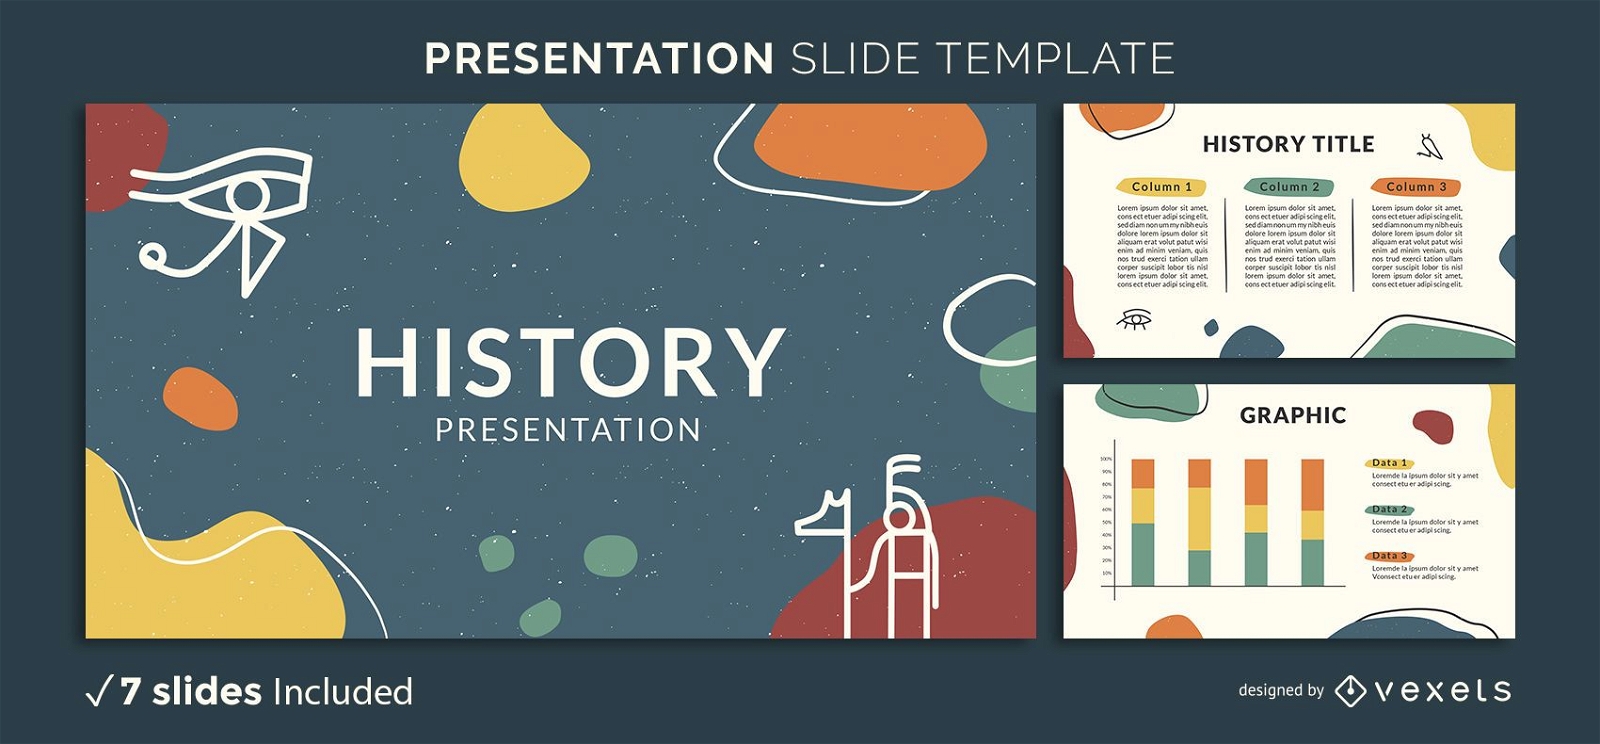 History Presentation Template Vector Download